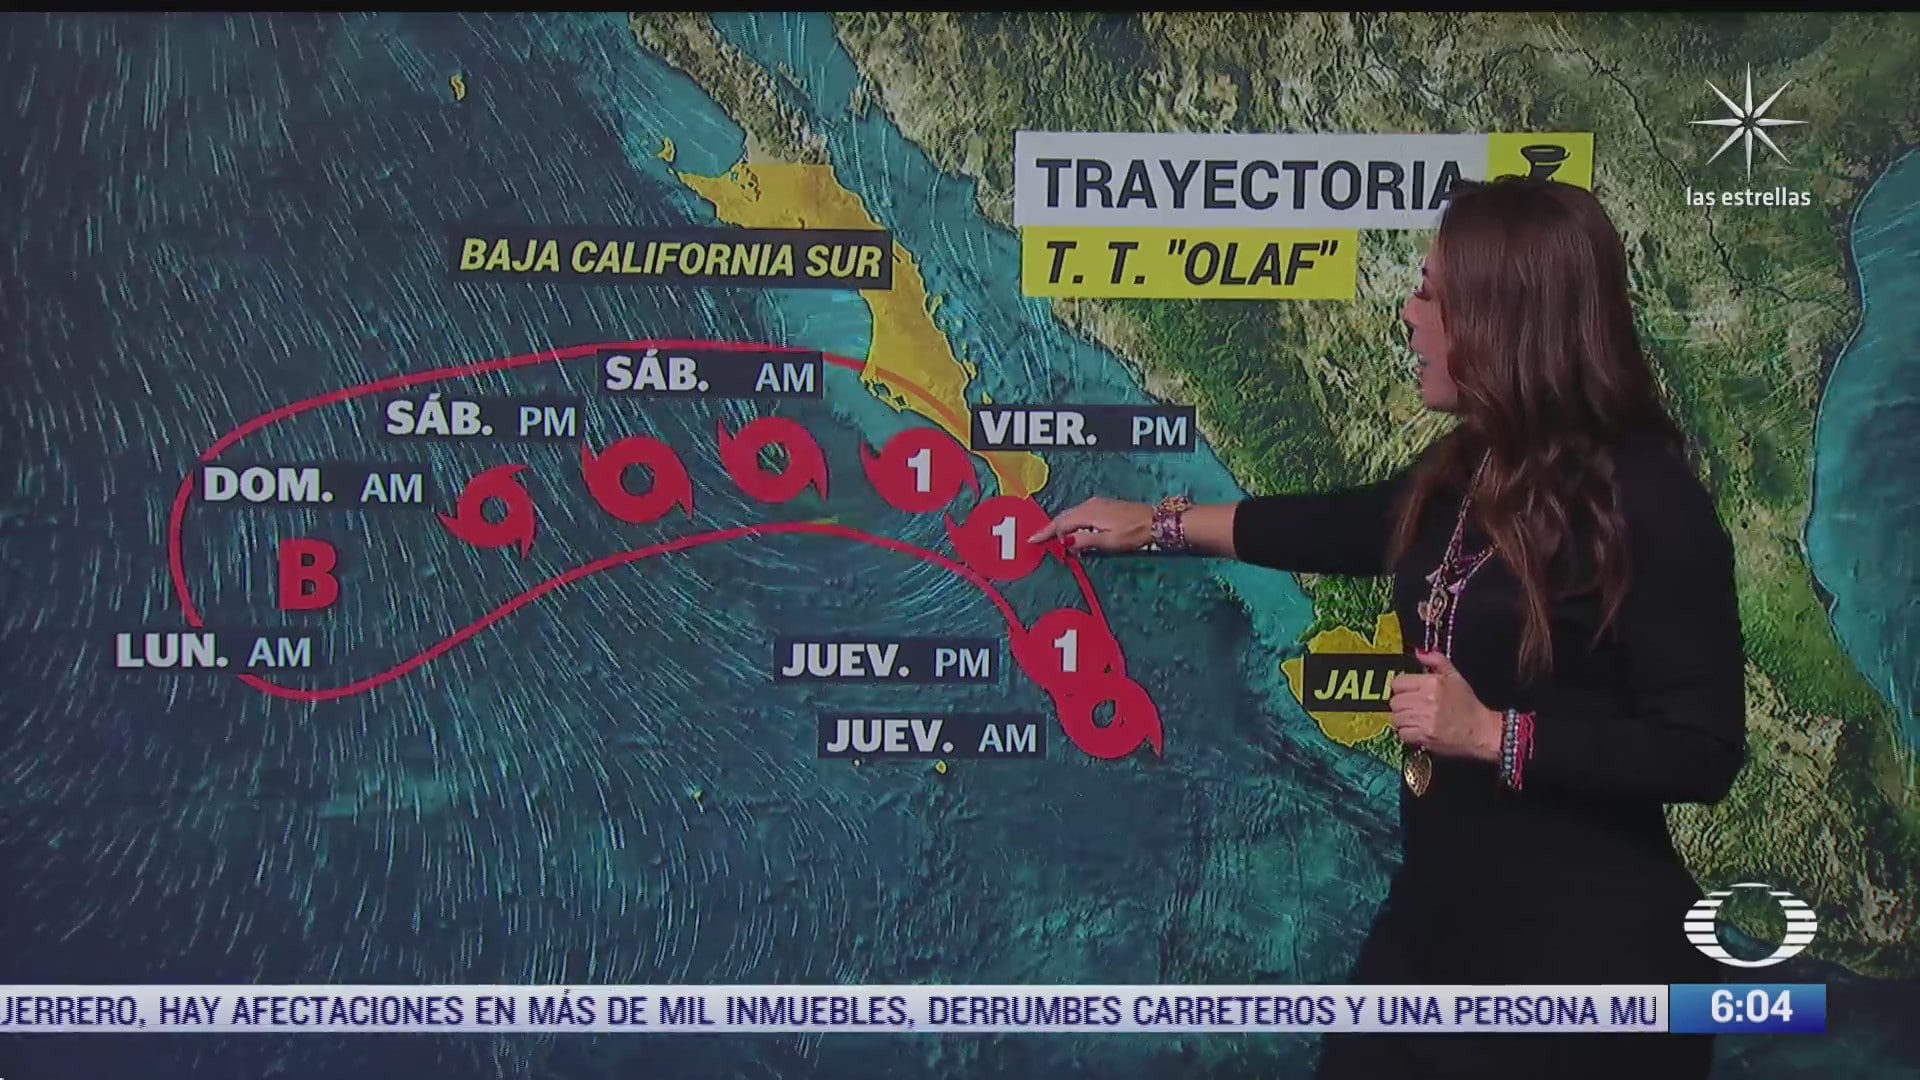 olaf podria intensificarse a huracan al suroeste de baja california sur